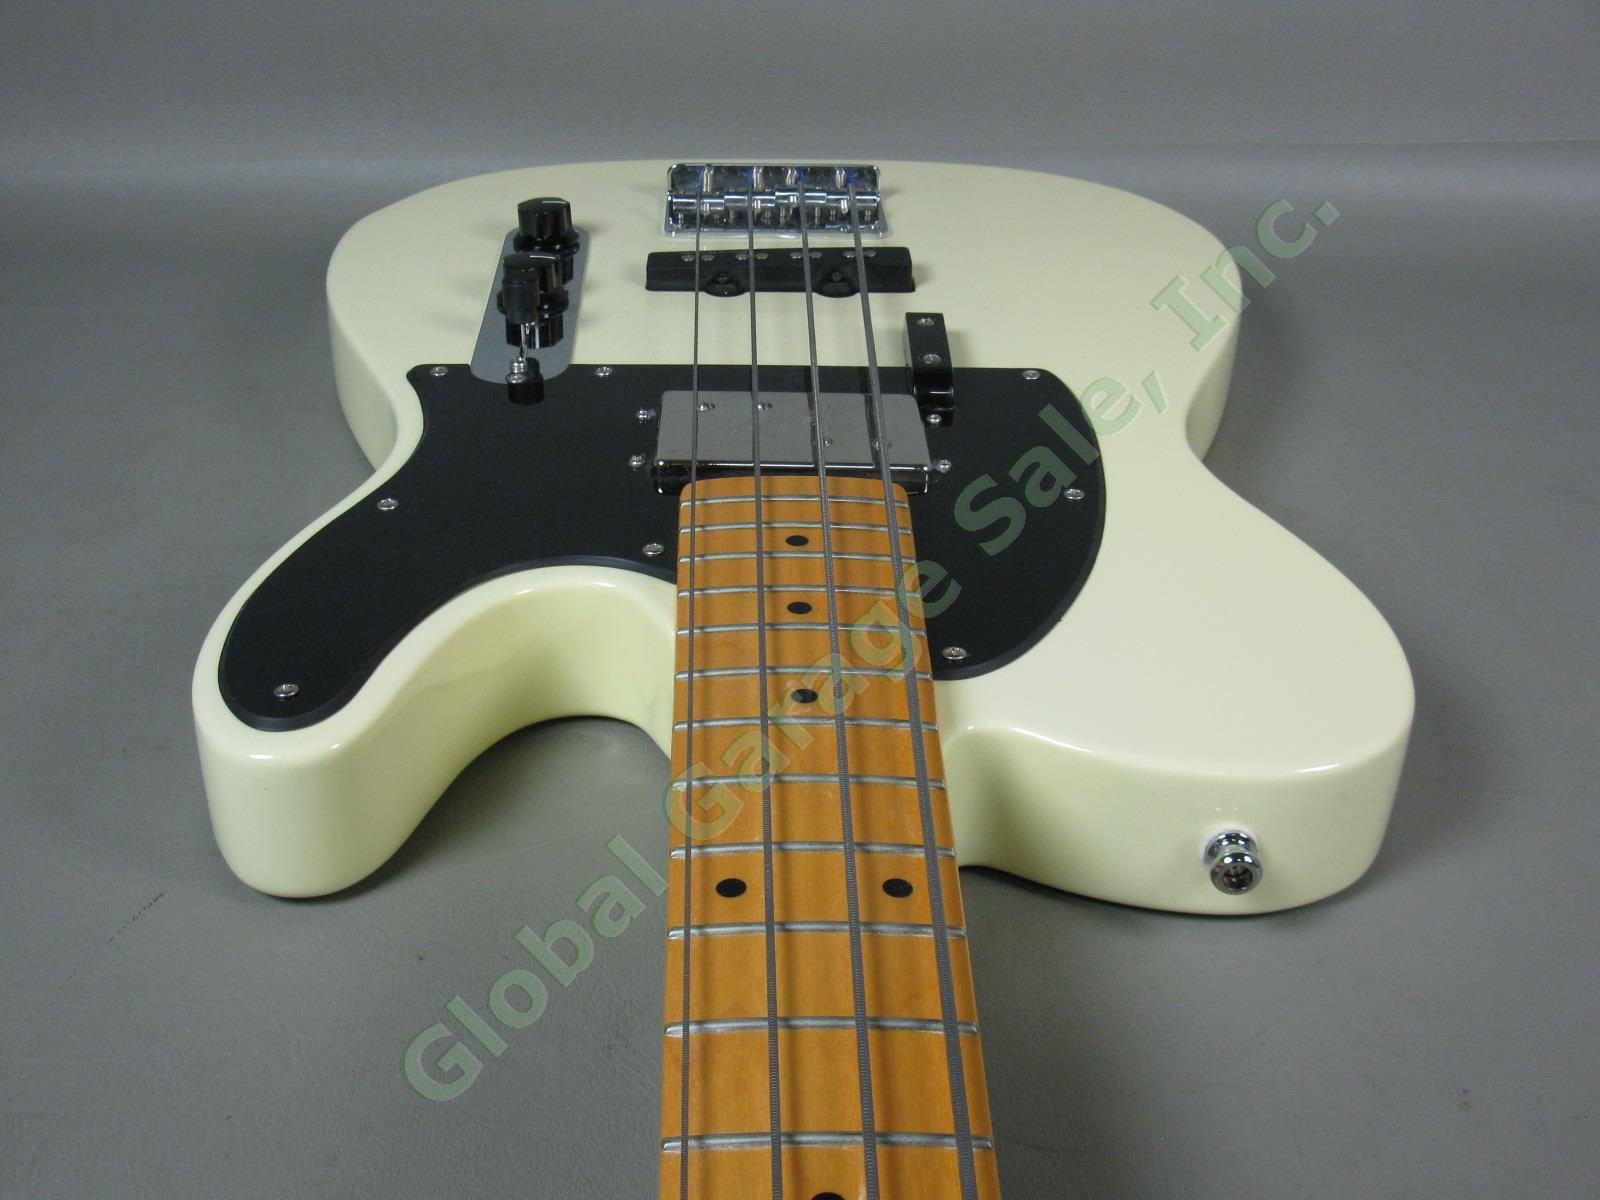 2012 Fender Squier Vtg Modified Telecaster Bass Special Guitar w/ Case Near Mint 7